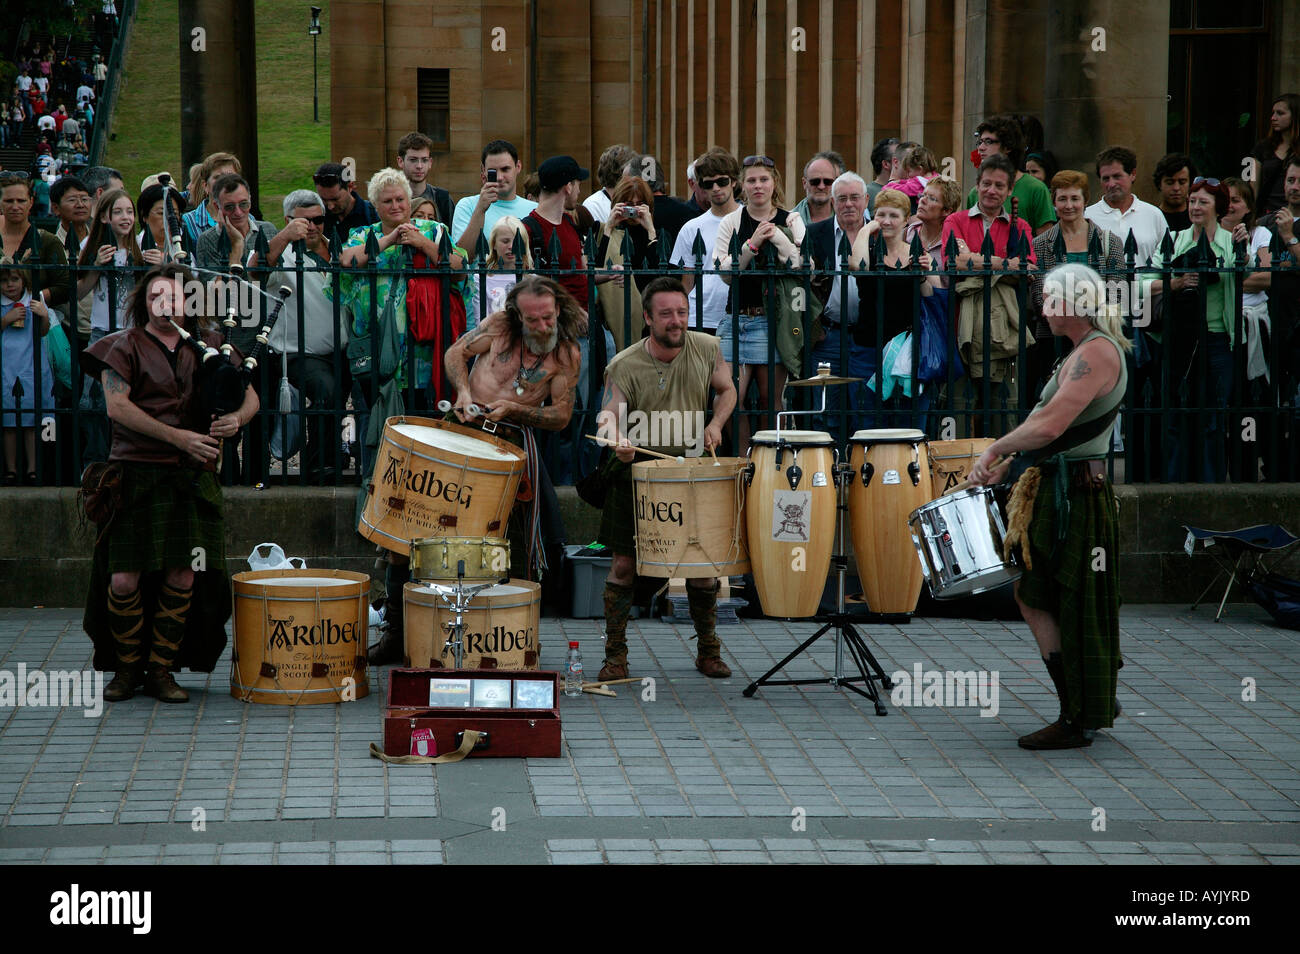 Clan an Drumman Scottish drum band group during Edinburgh Fringe Festival Scotland Stock Photo